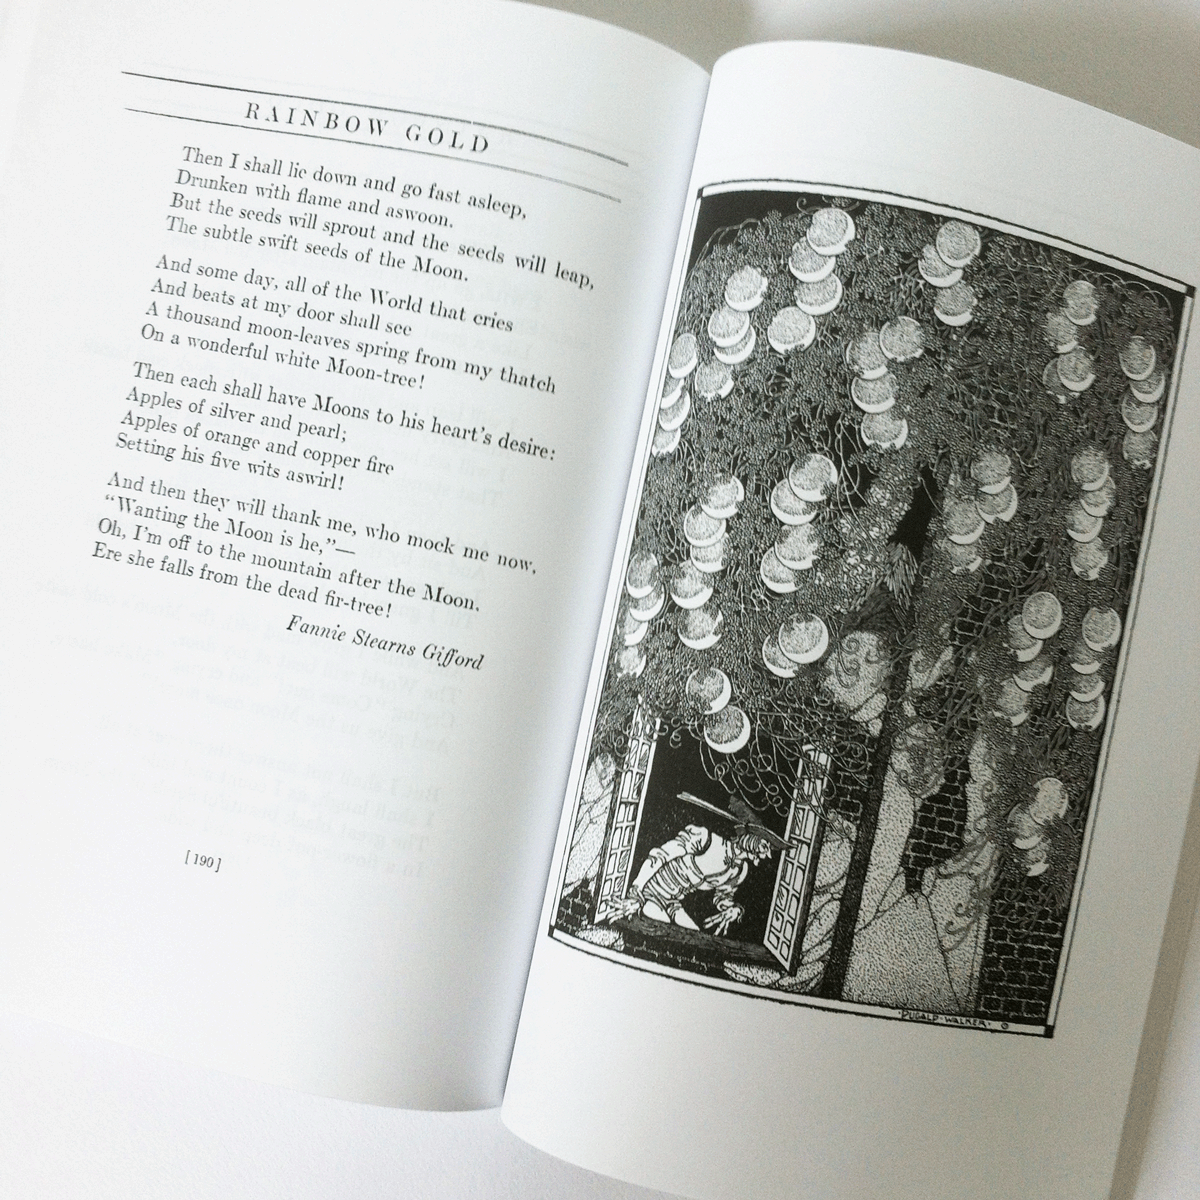 Moon Folly, a poem by Fannie Stearns Gifford, illustrated by Dugald Stewart Walker. Rainbow Gold Book.